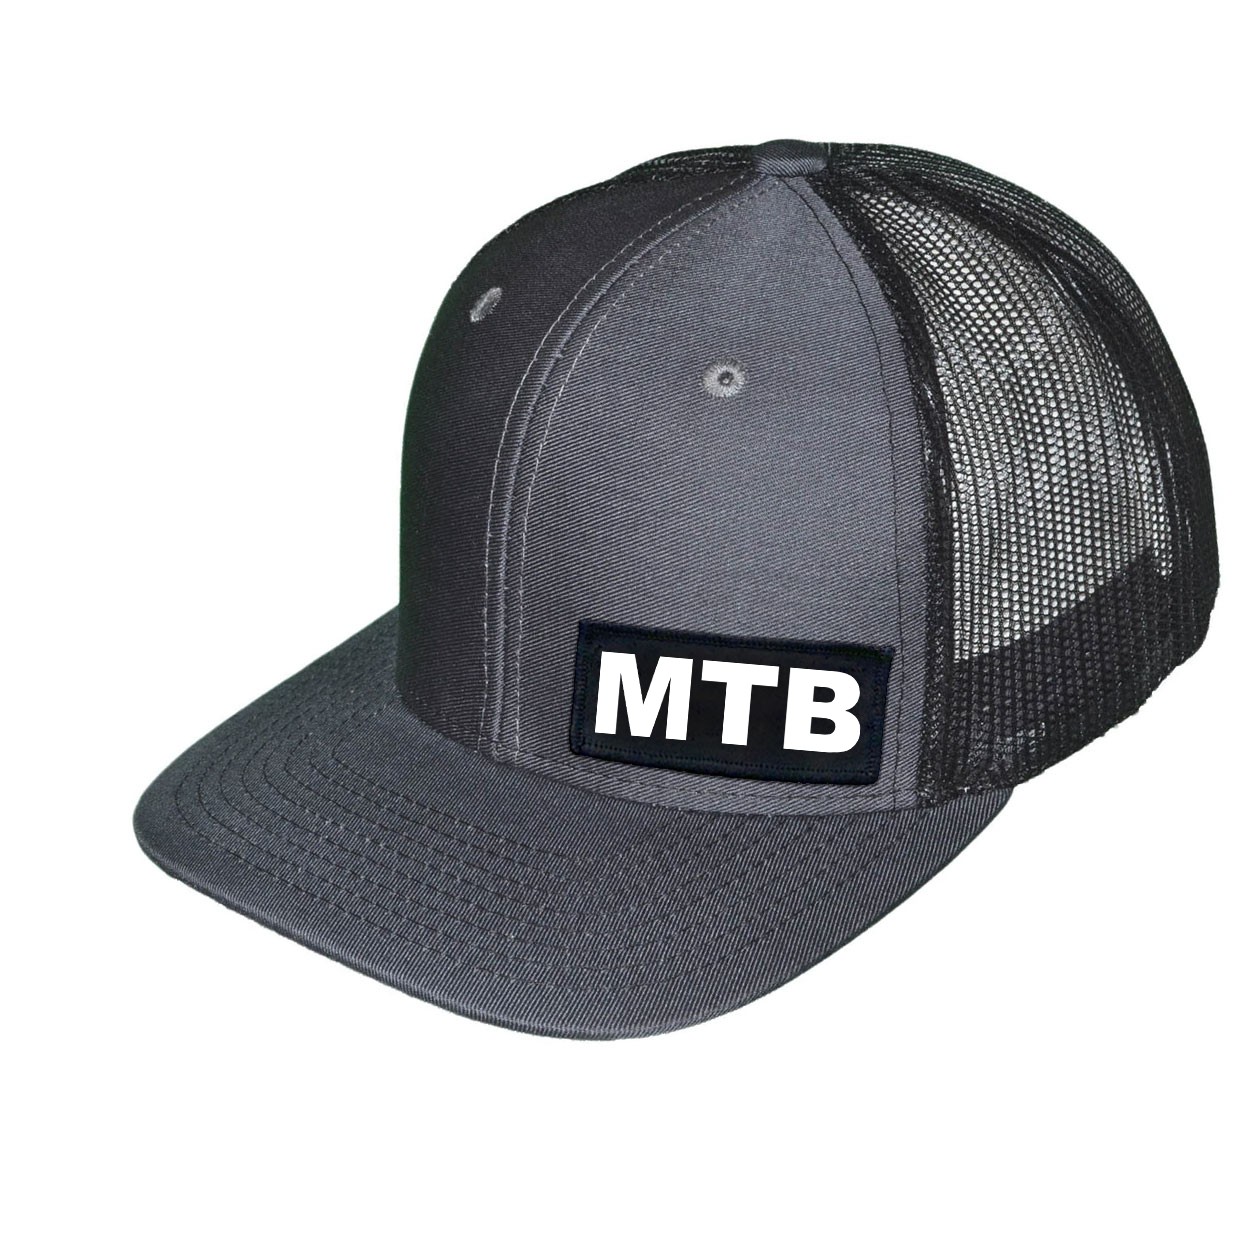 Mtb Brand Logo Night Out Woven Patch Snapback Trucker Hat Dark Gray/Black